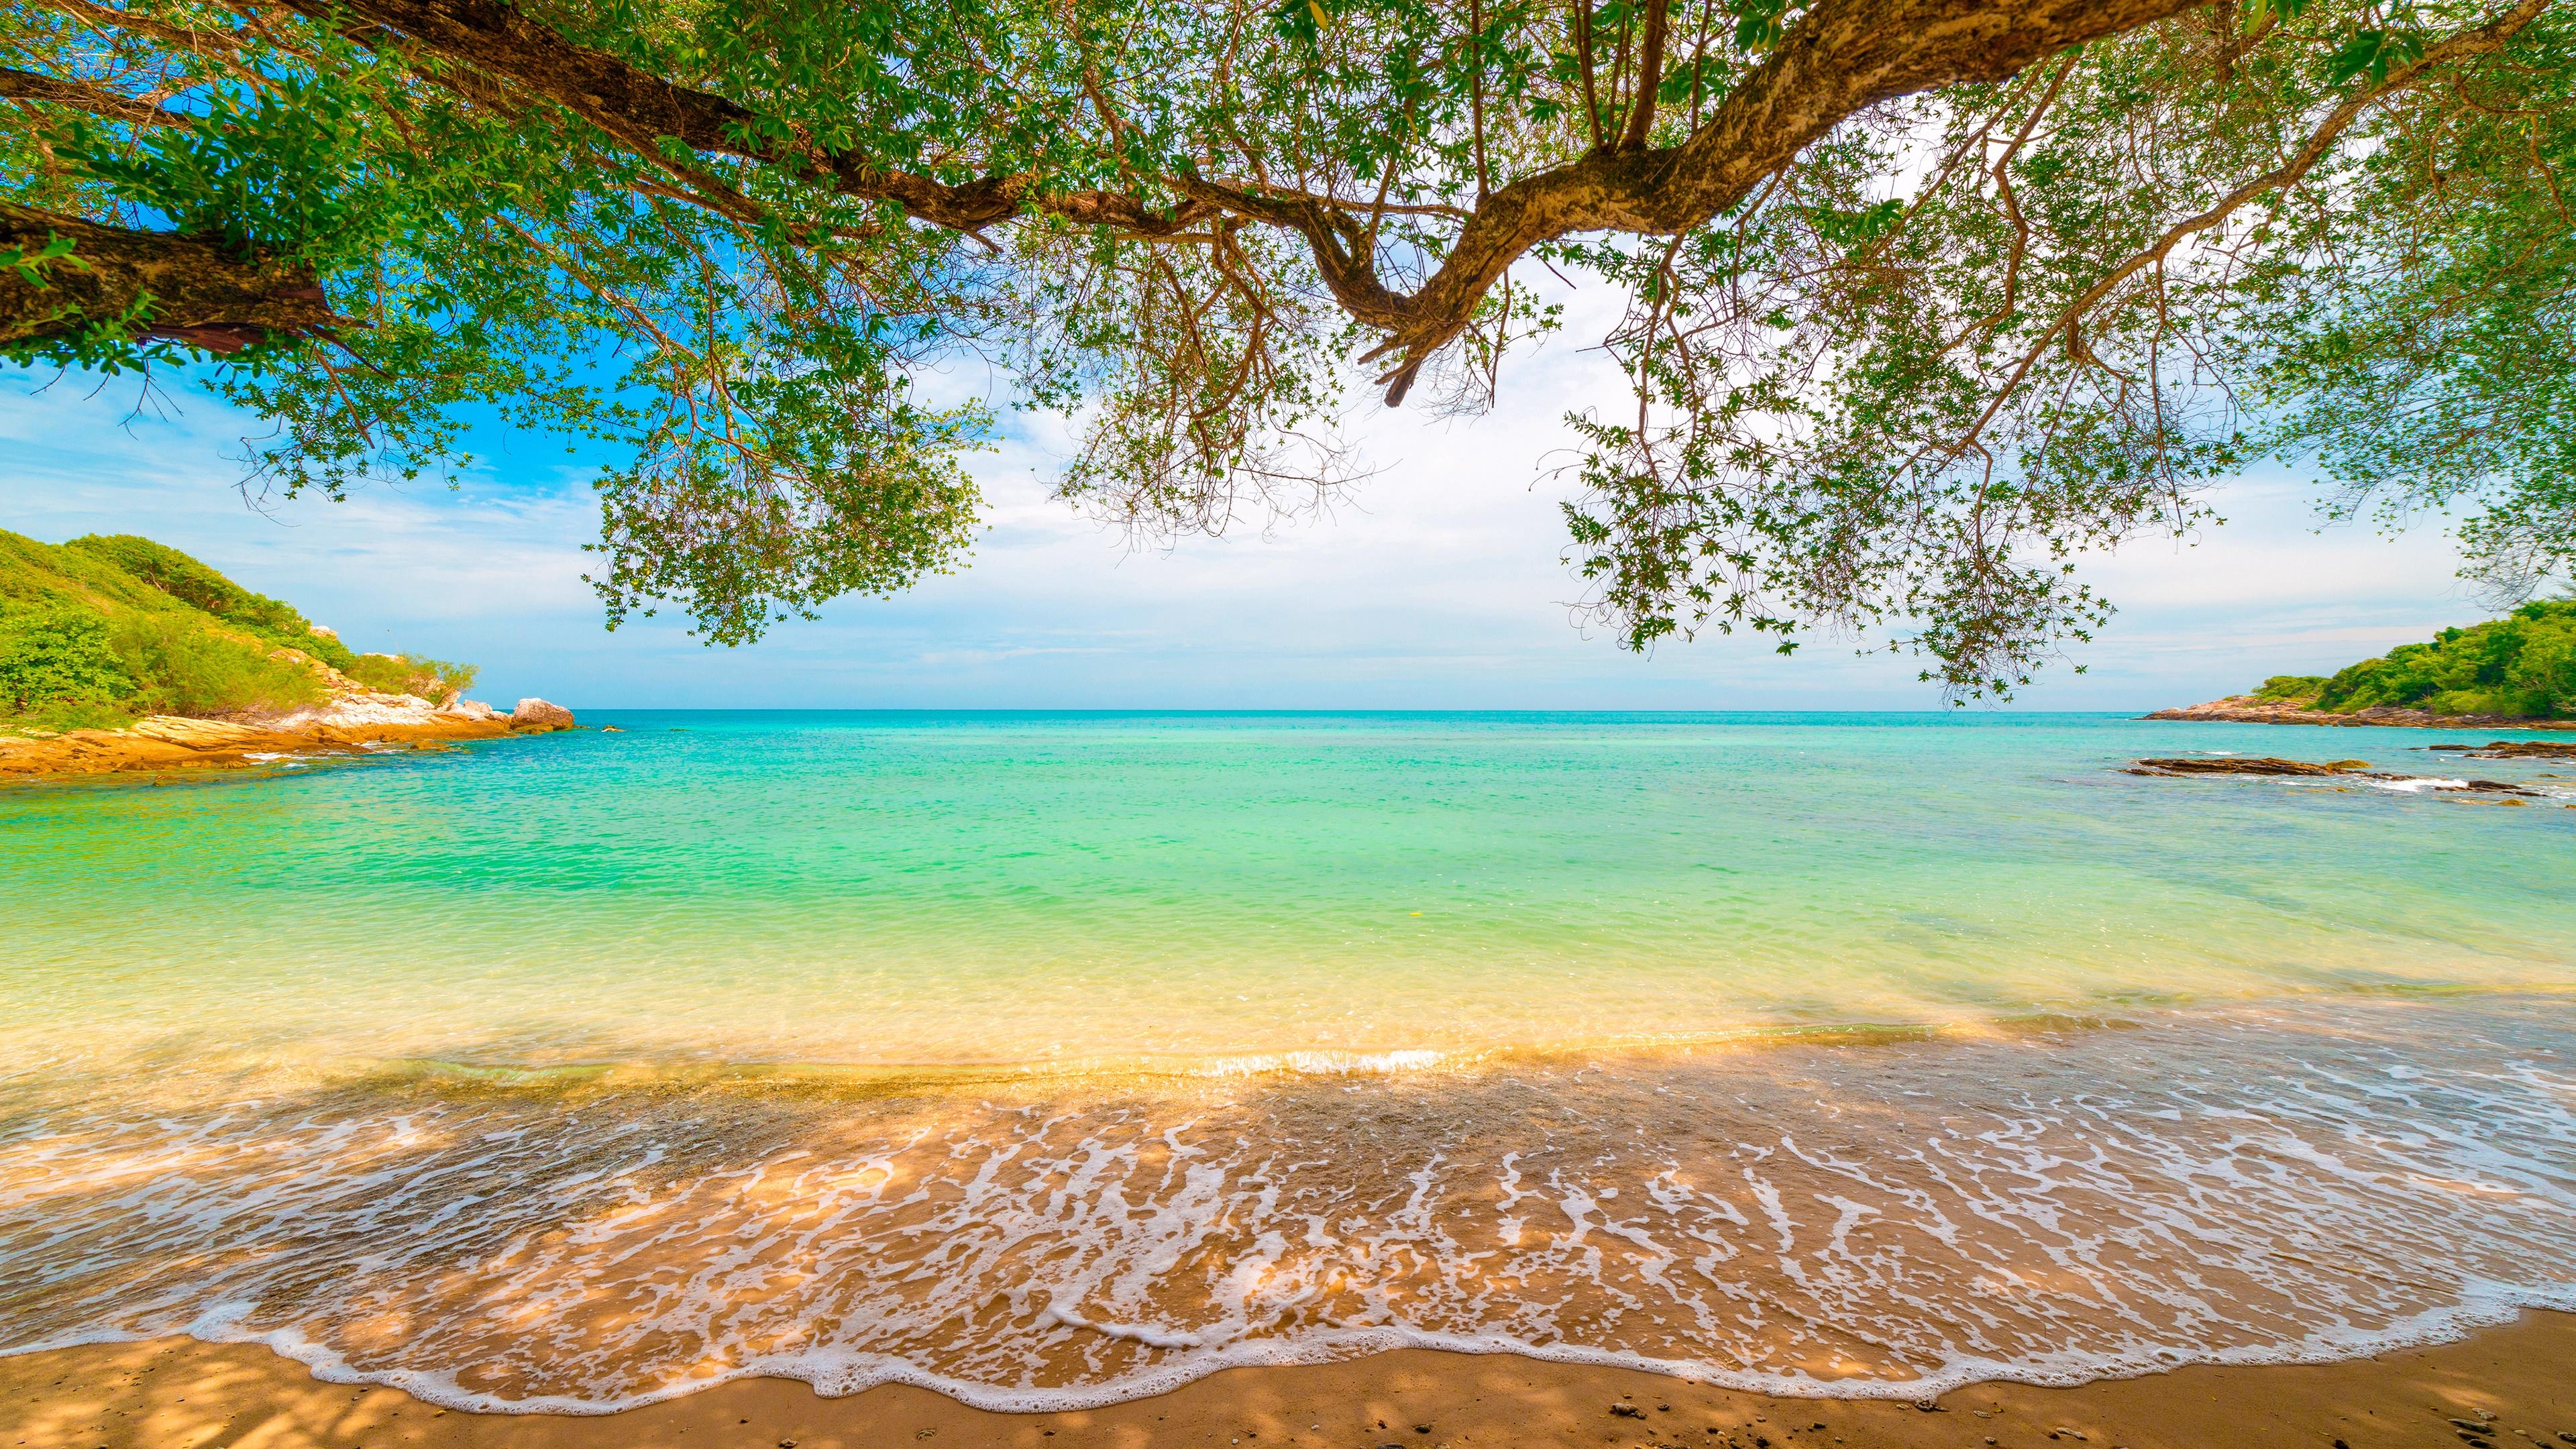 Tropical Sand Beach Lagoon Coastline Sea Waves Turquoise Water Trees Willow Overhanged Horizon